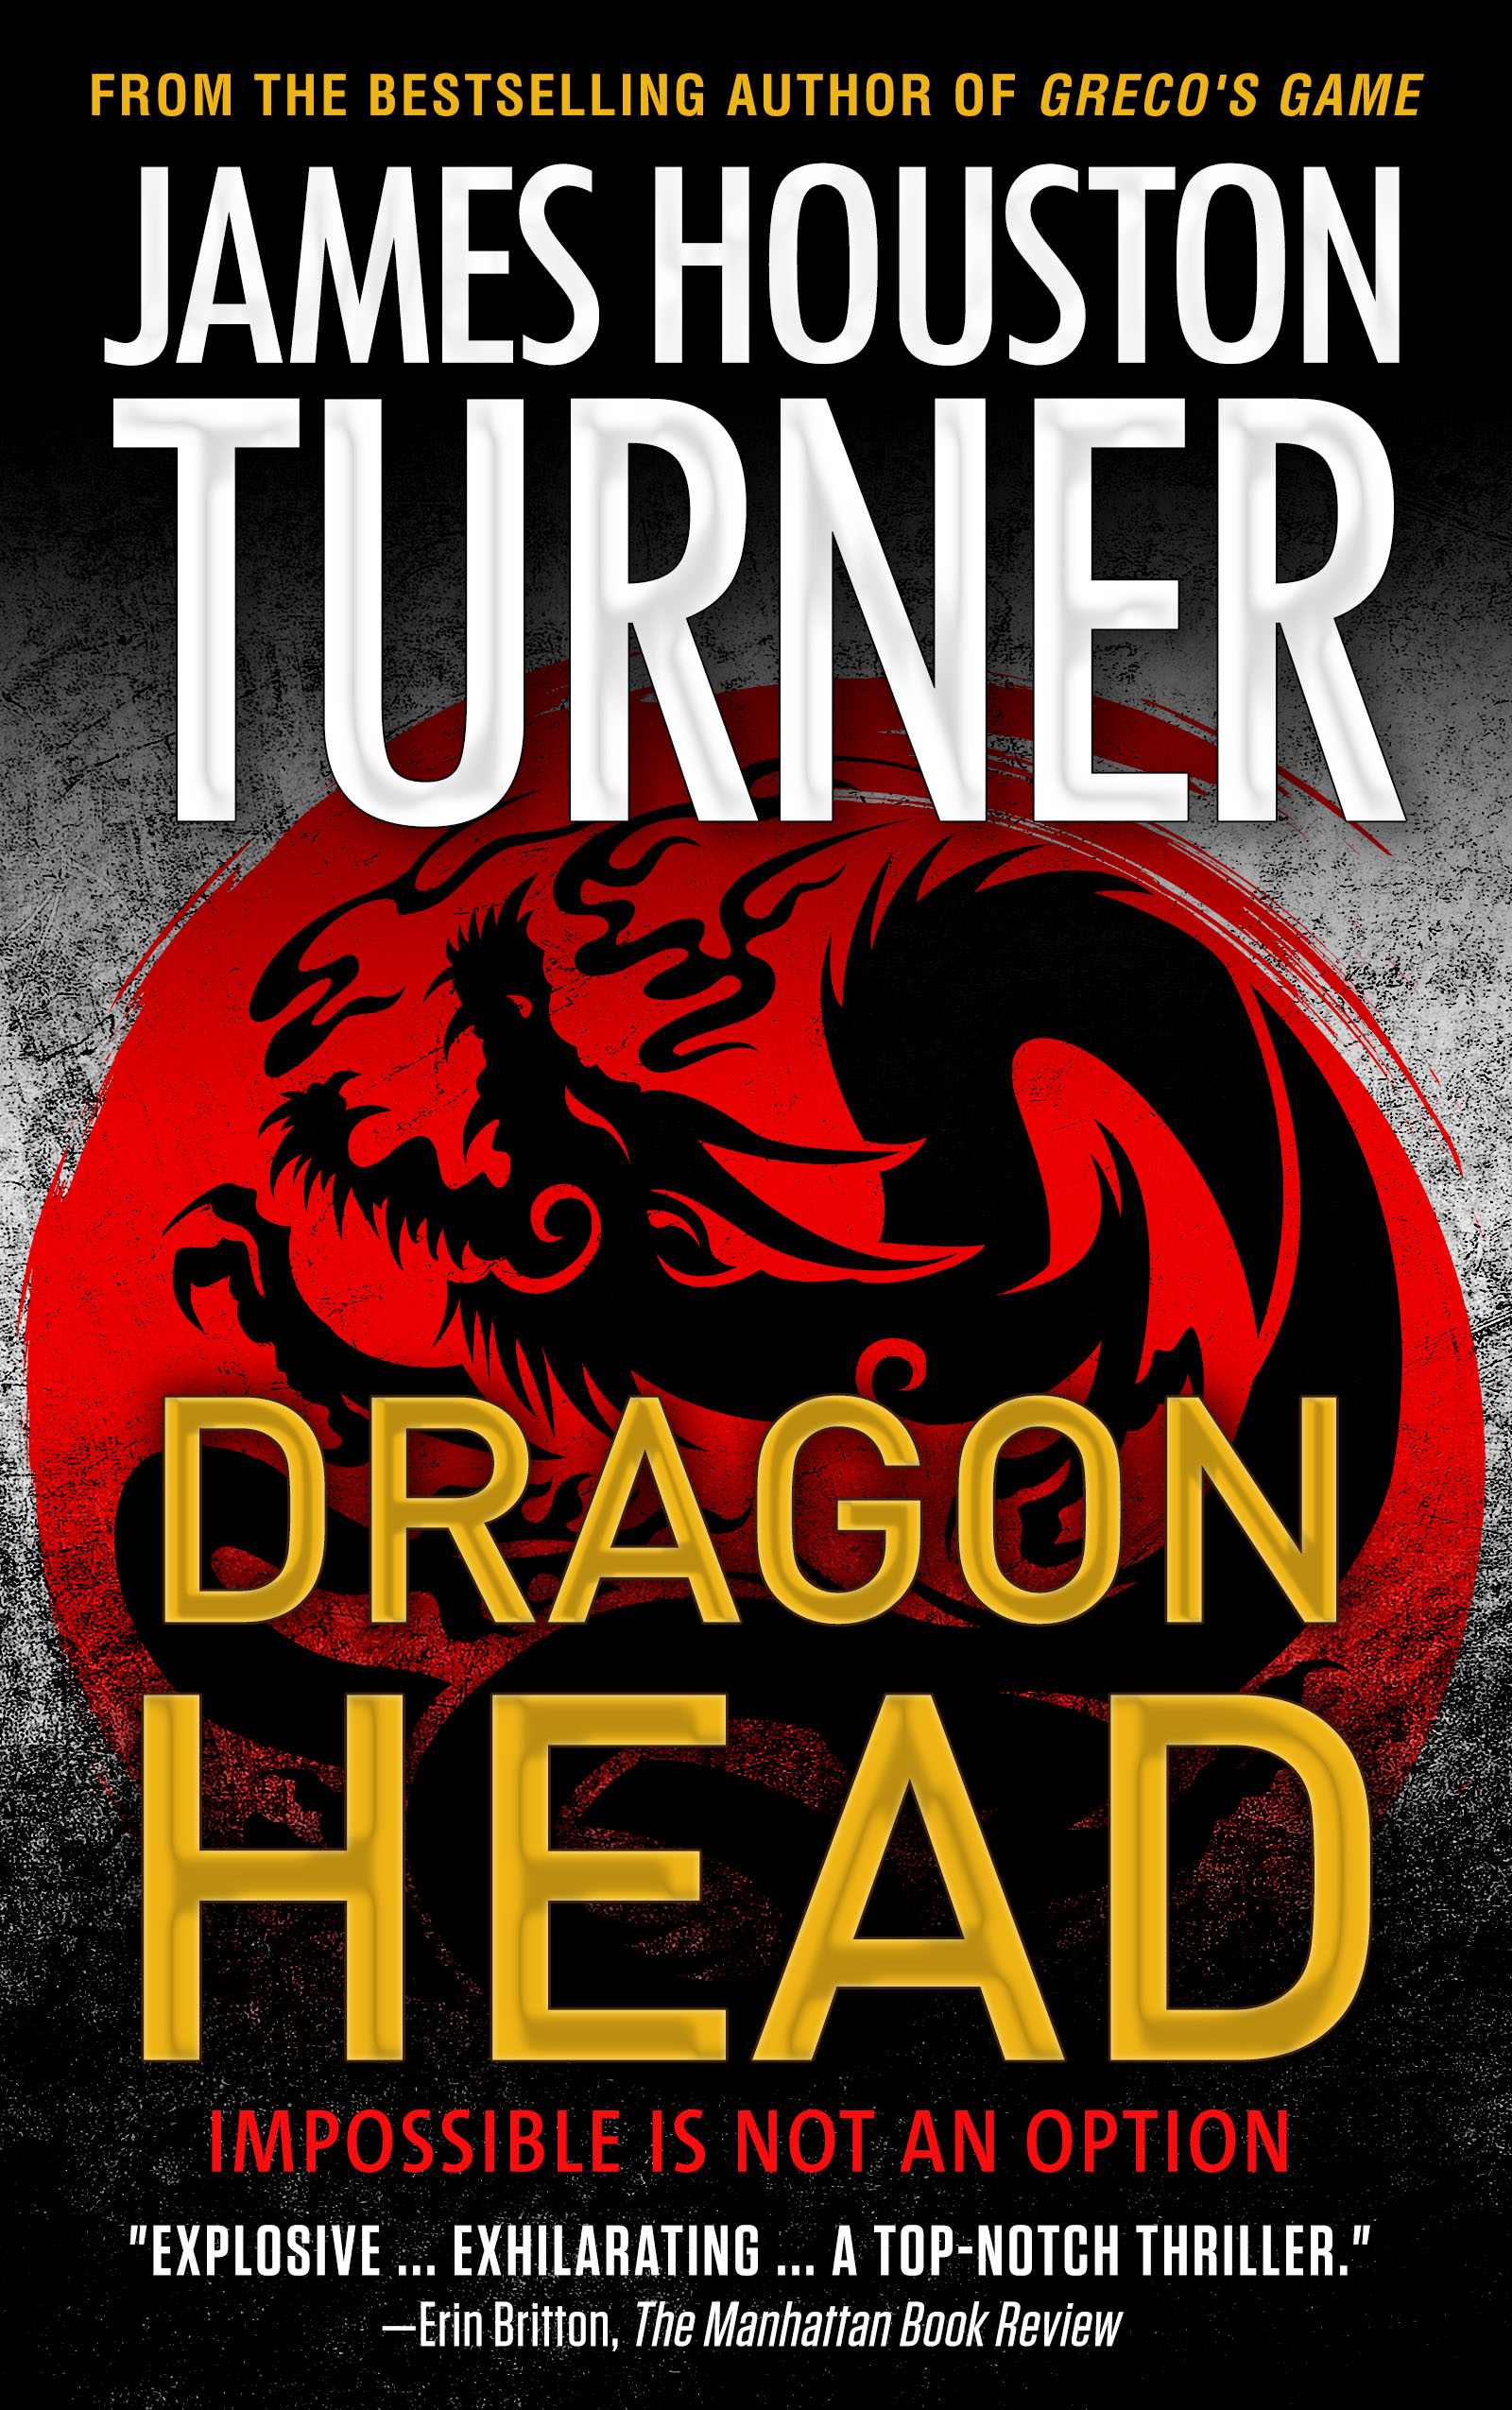 Dragon Head by James Houston Turner